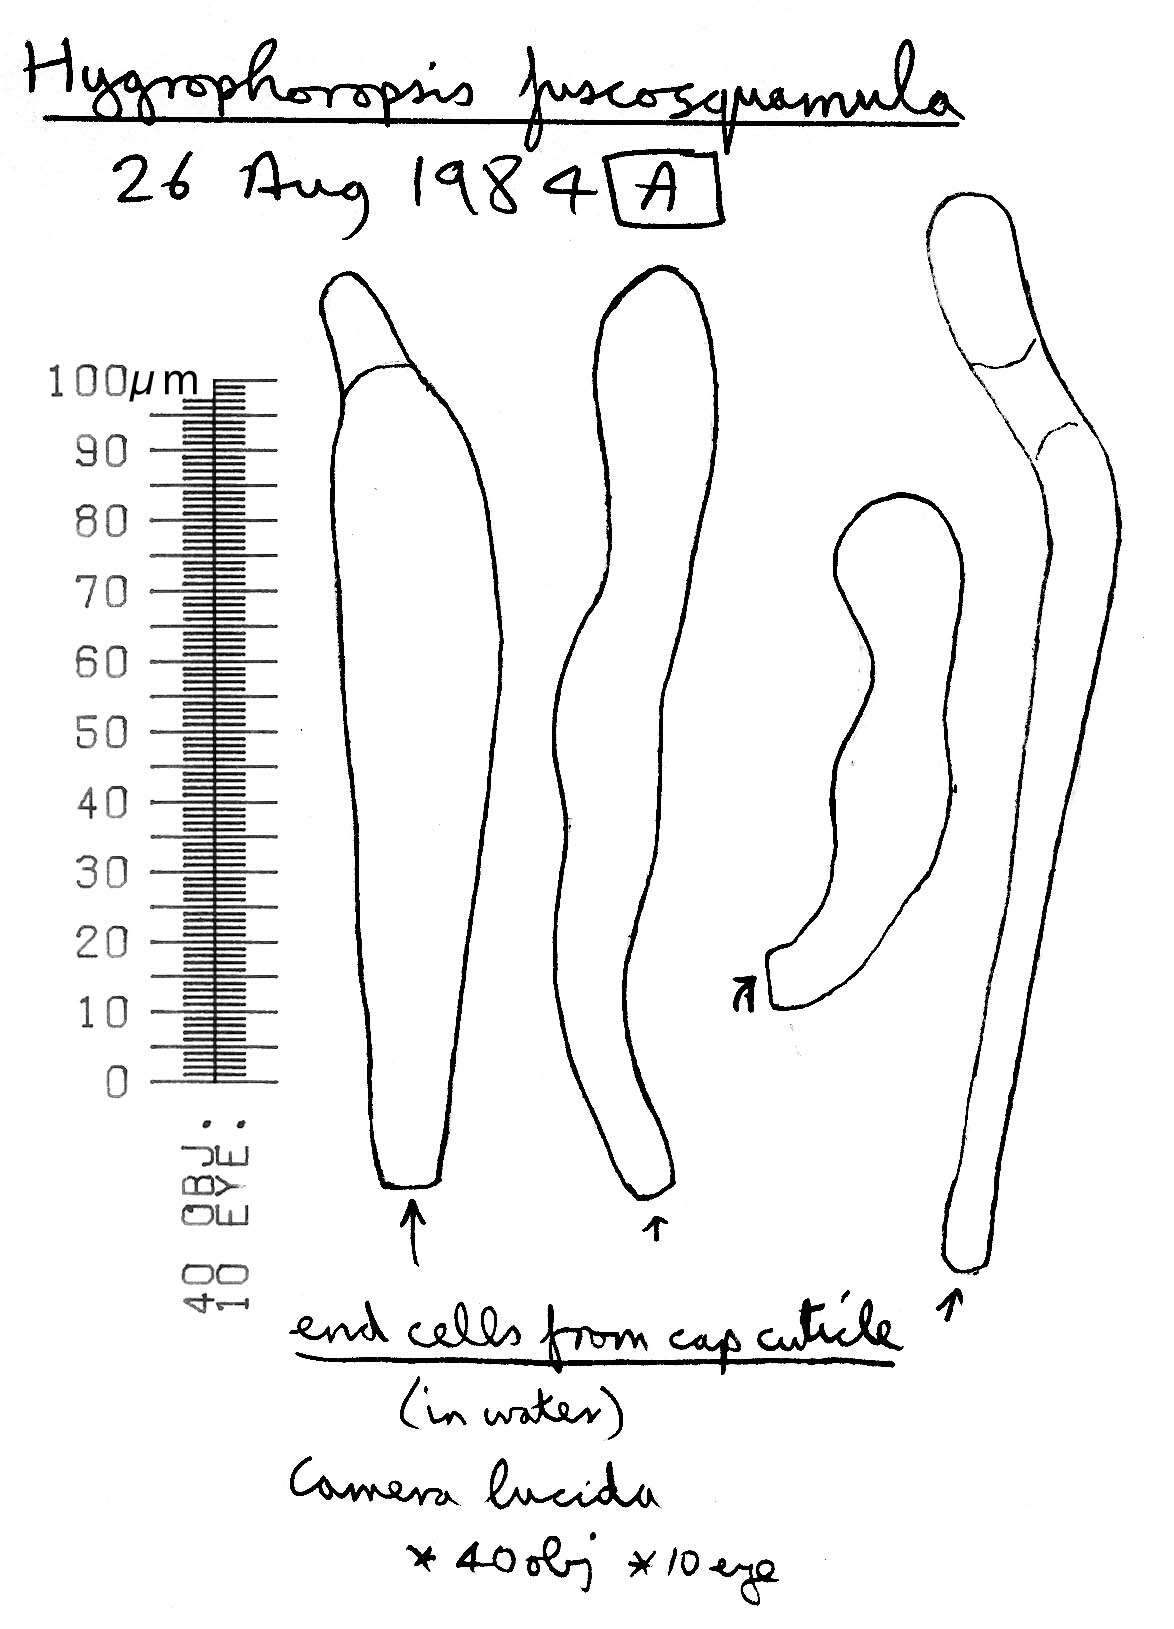 Image of Hygrophoropsis fuscosquamula P. D. Orton 1960